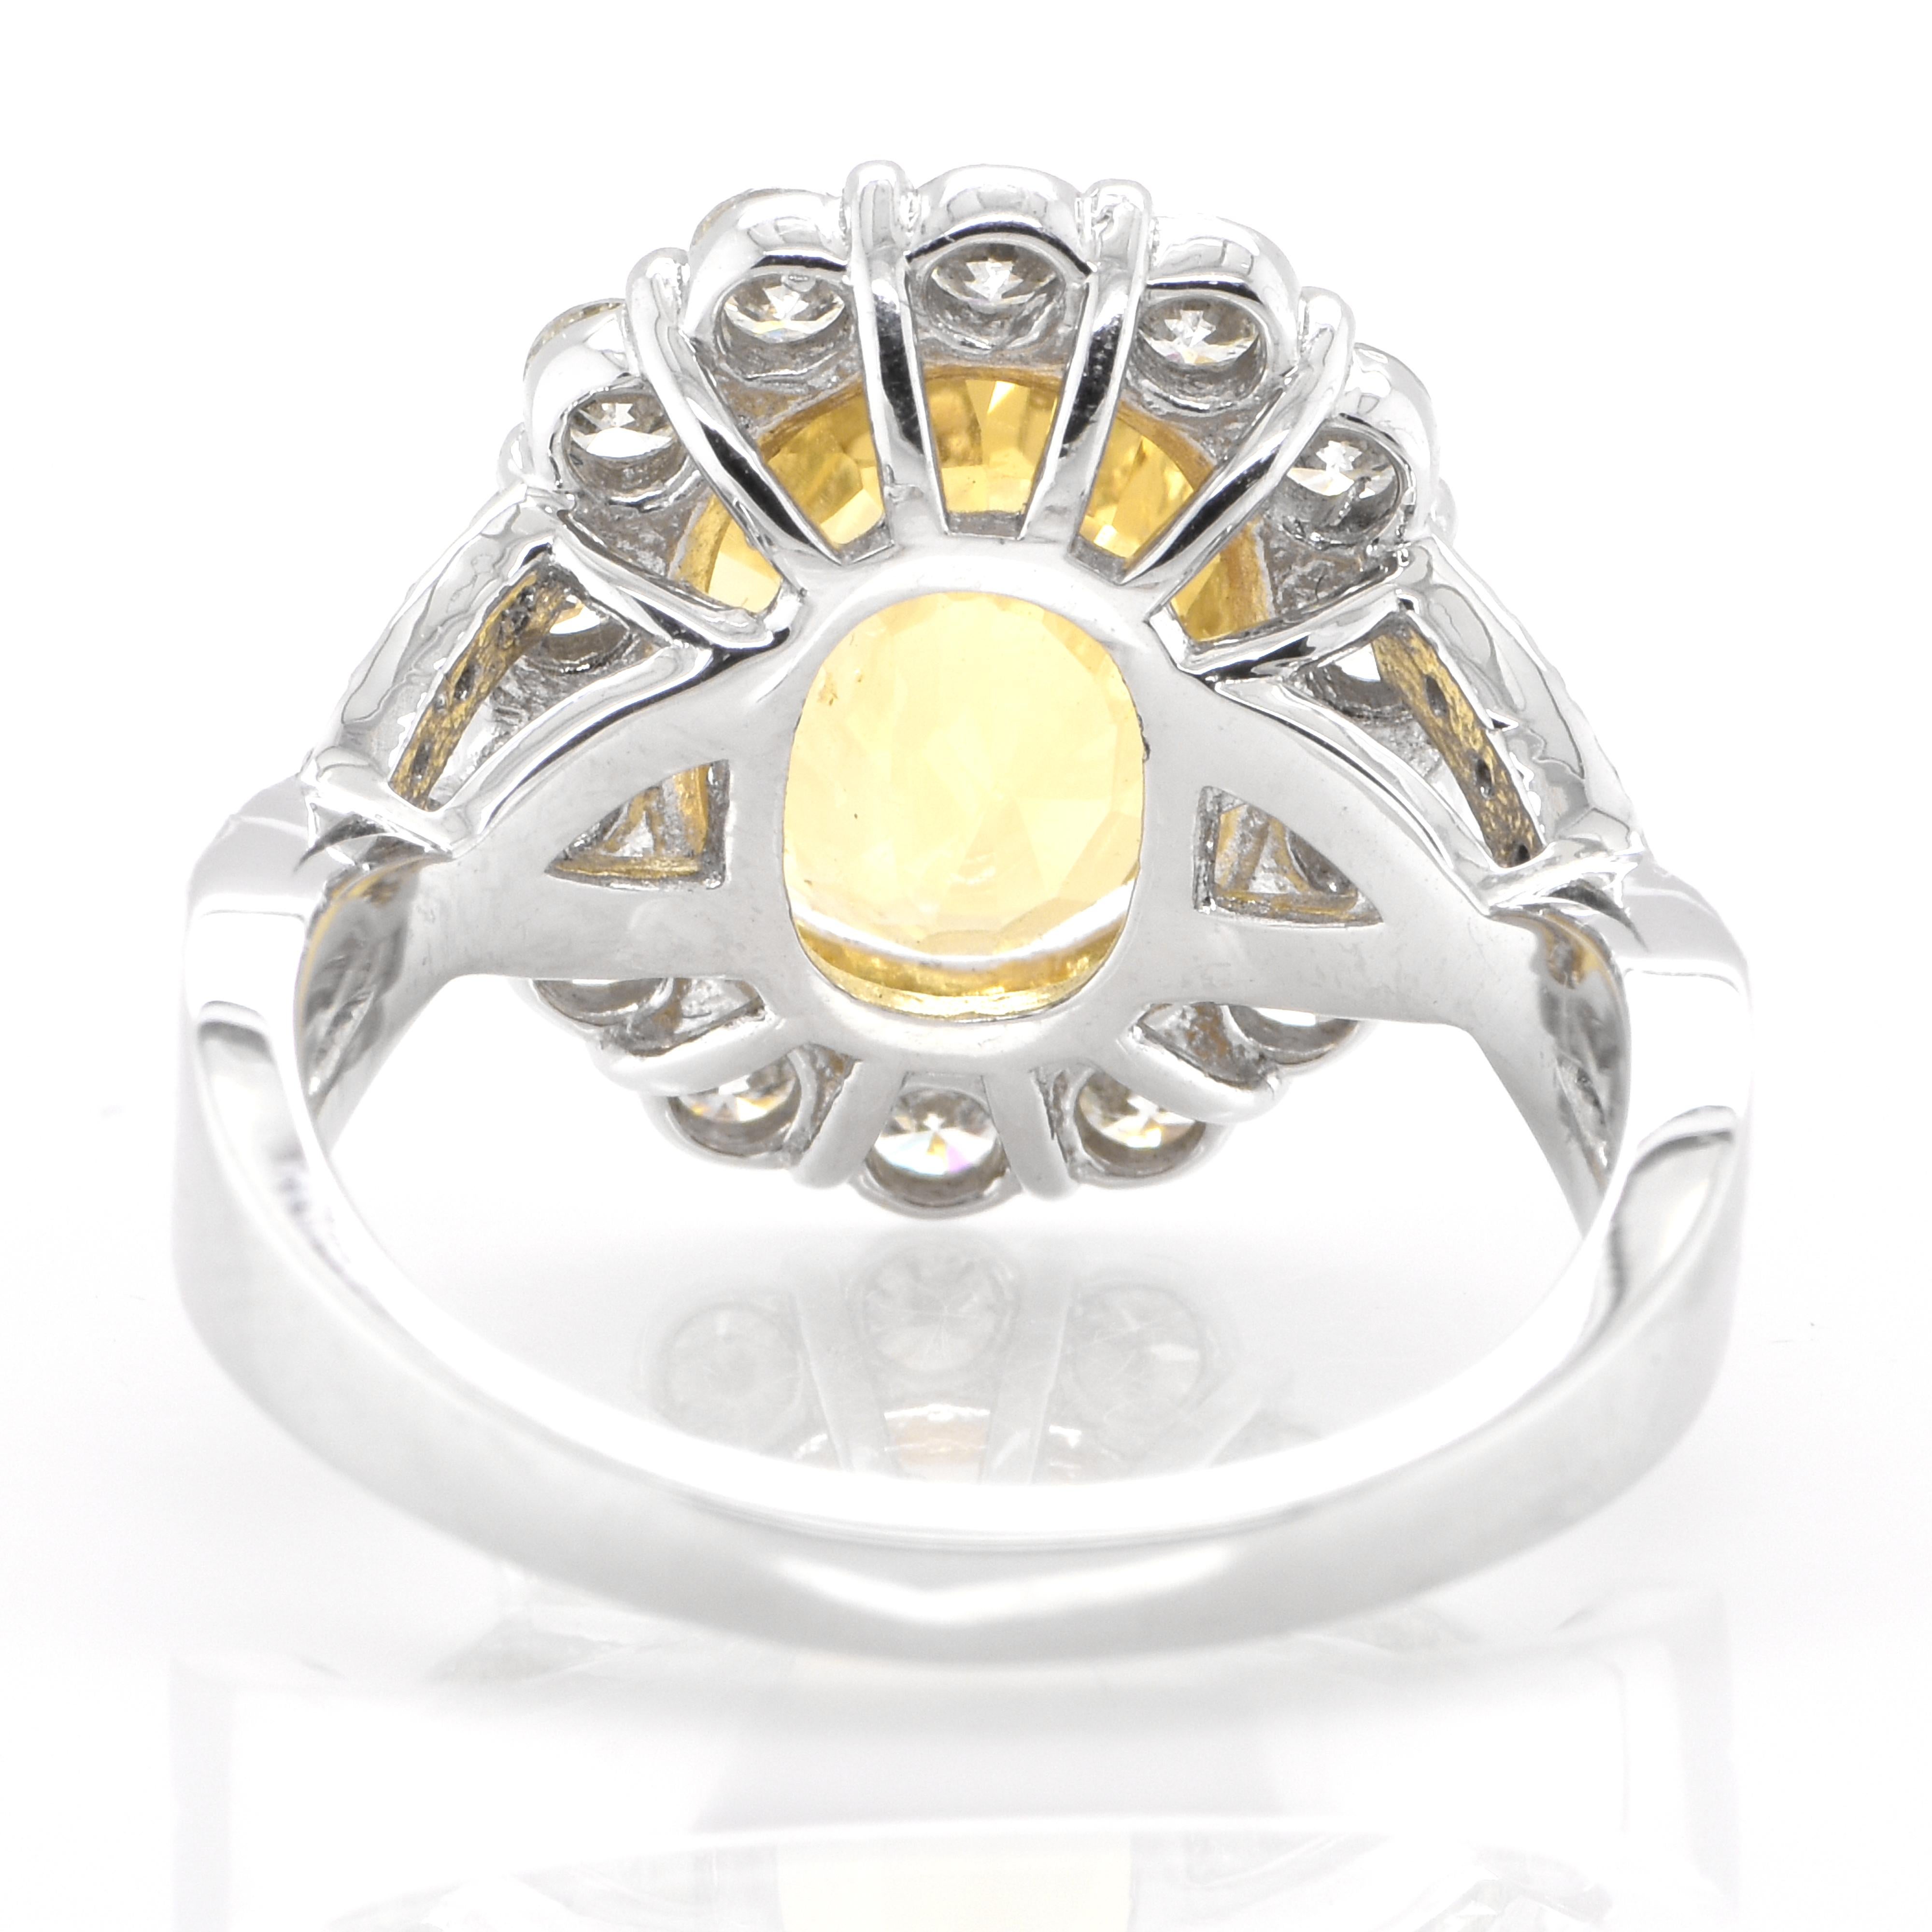 Women's Gia Certified 4.90 Carat Natural Yellow Sapphire & Diamond Ring Set in Platinum